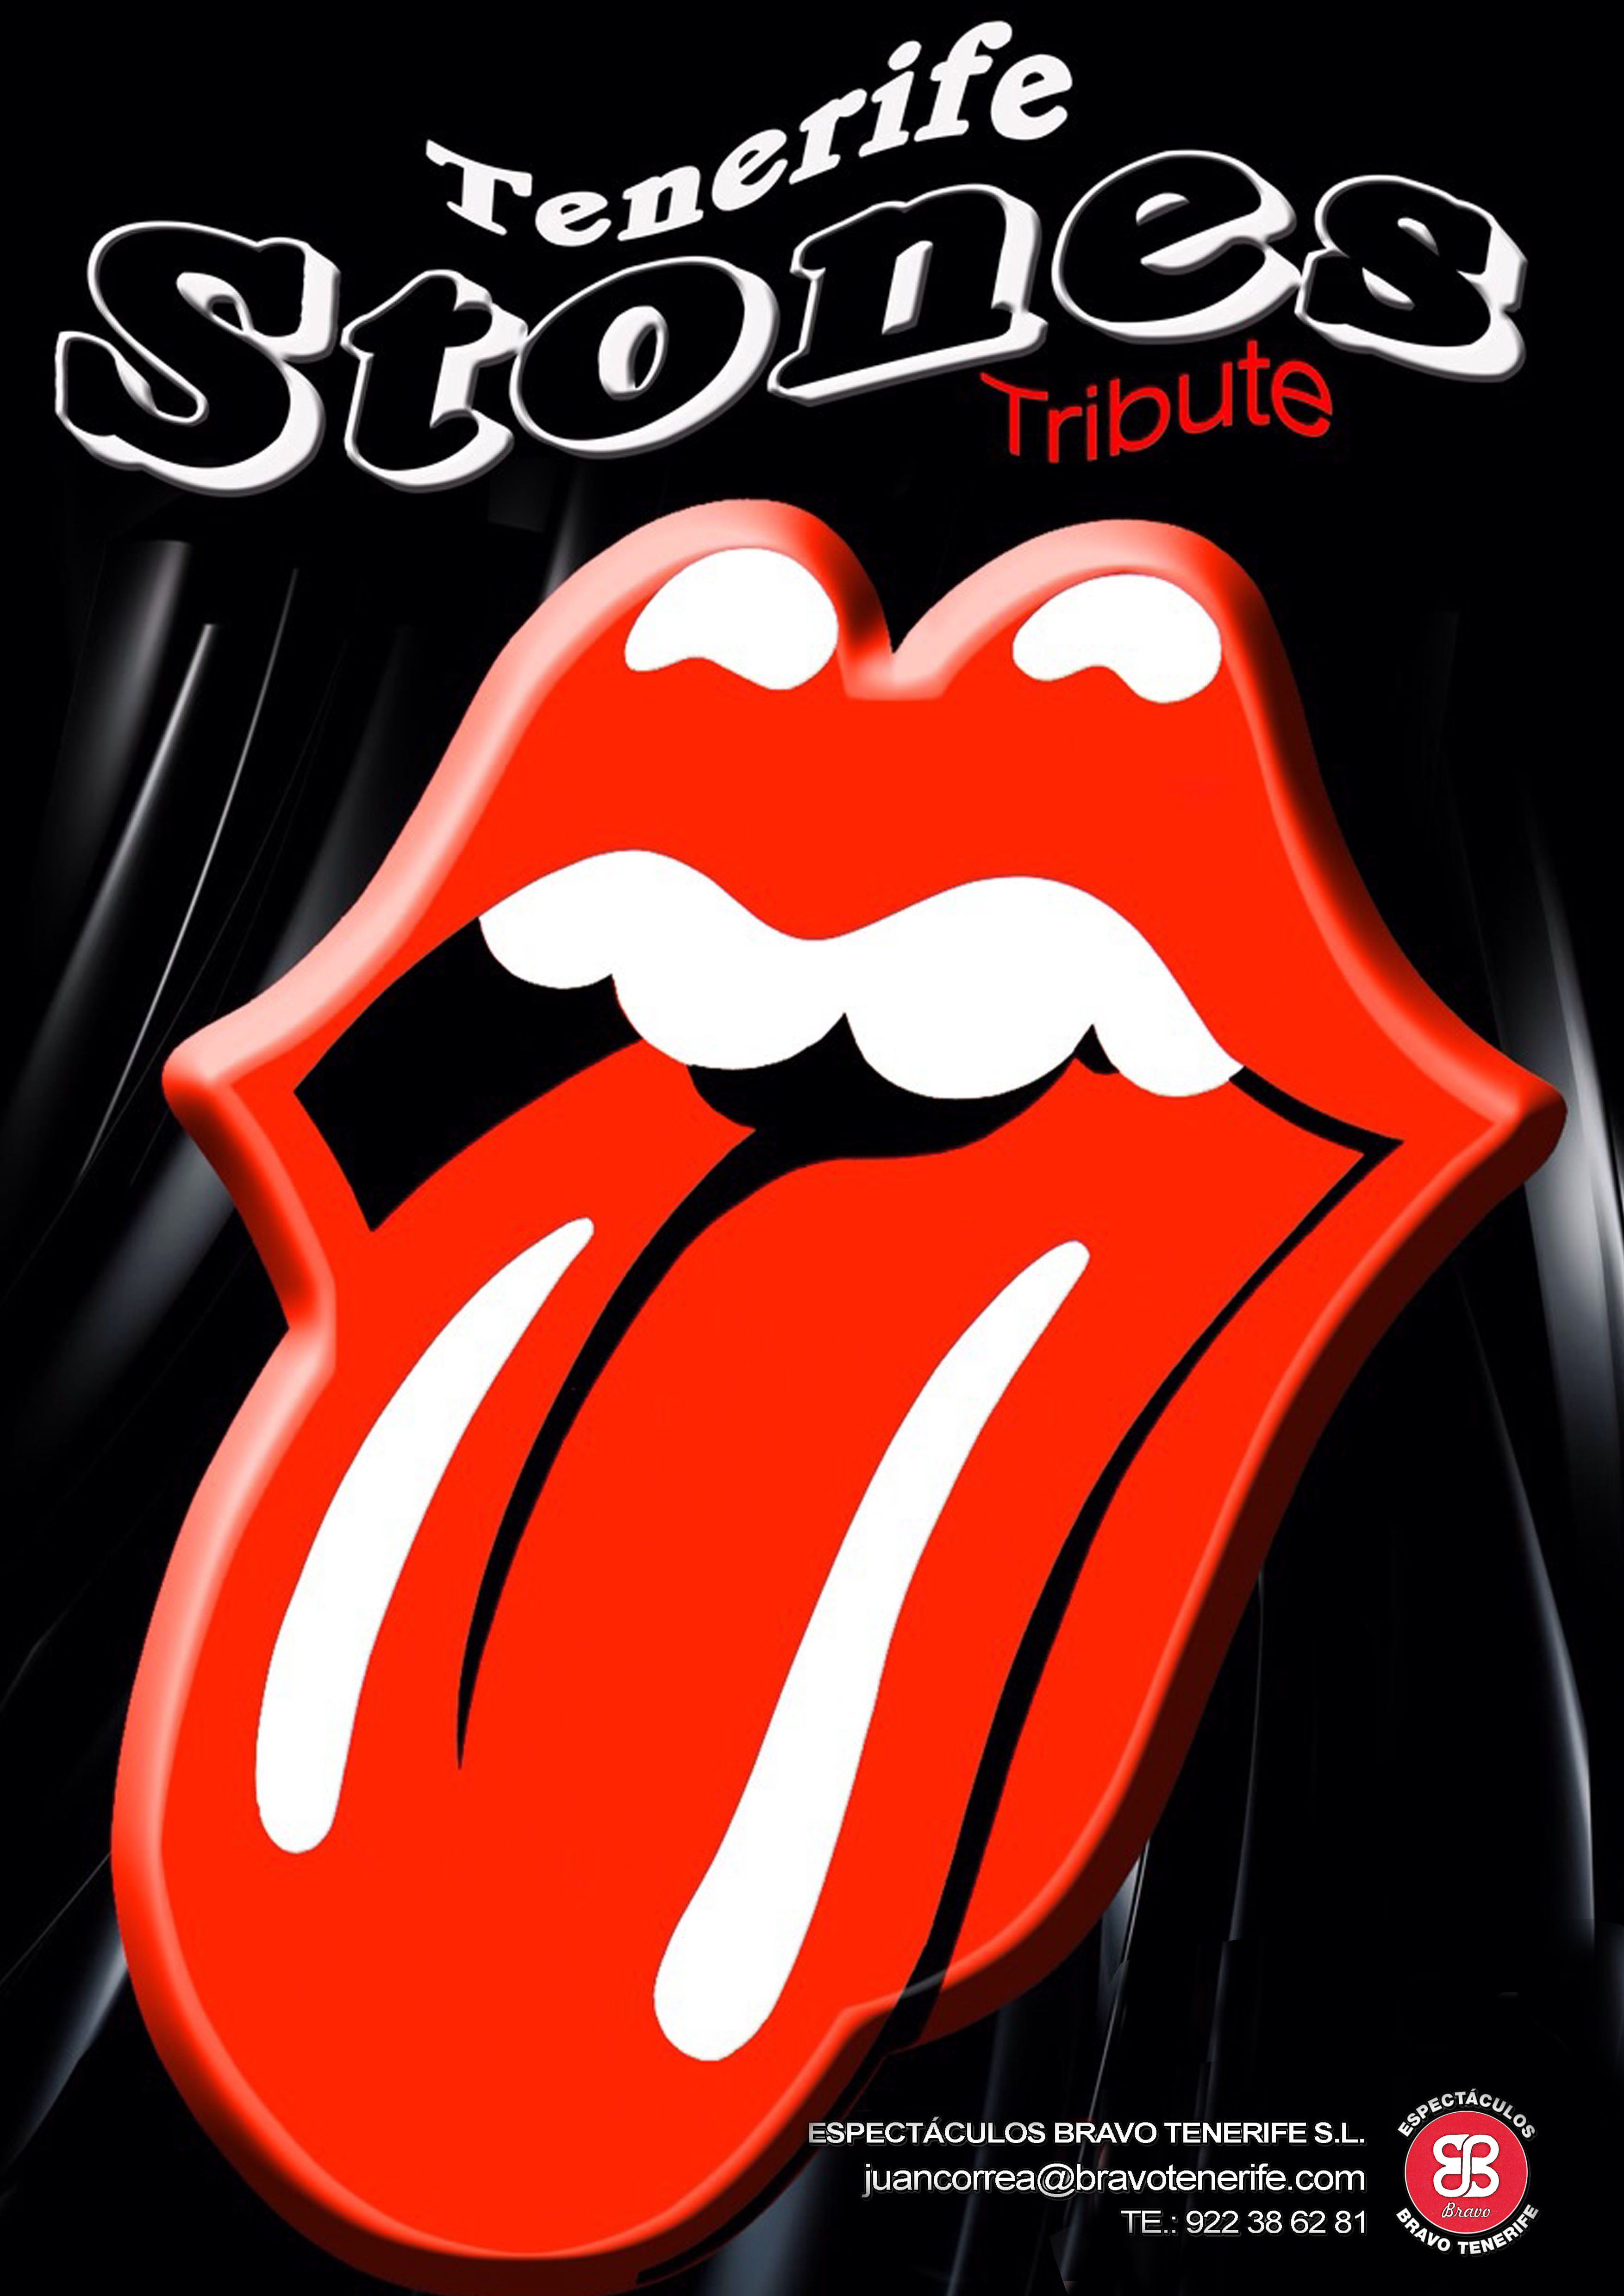 Rolling Stones Bravo